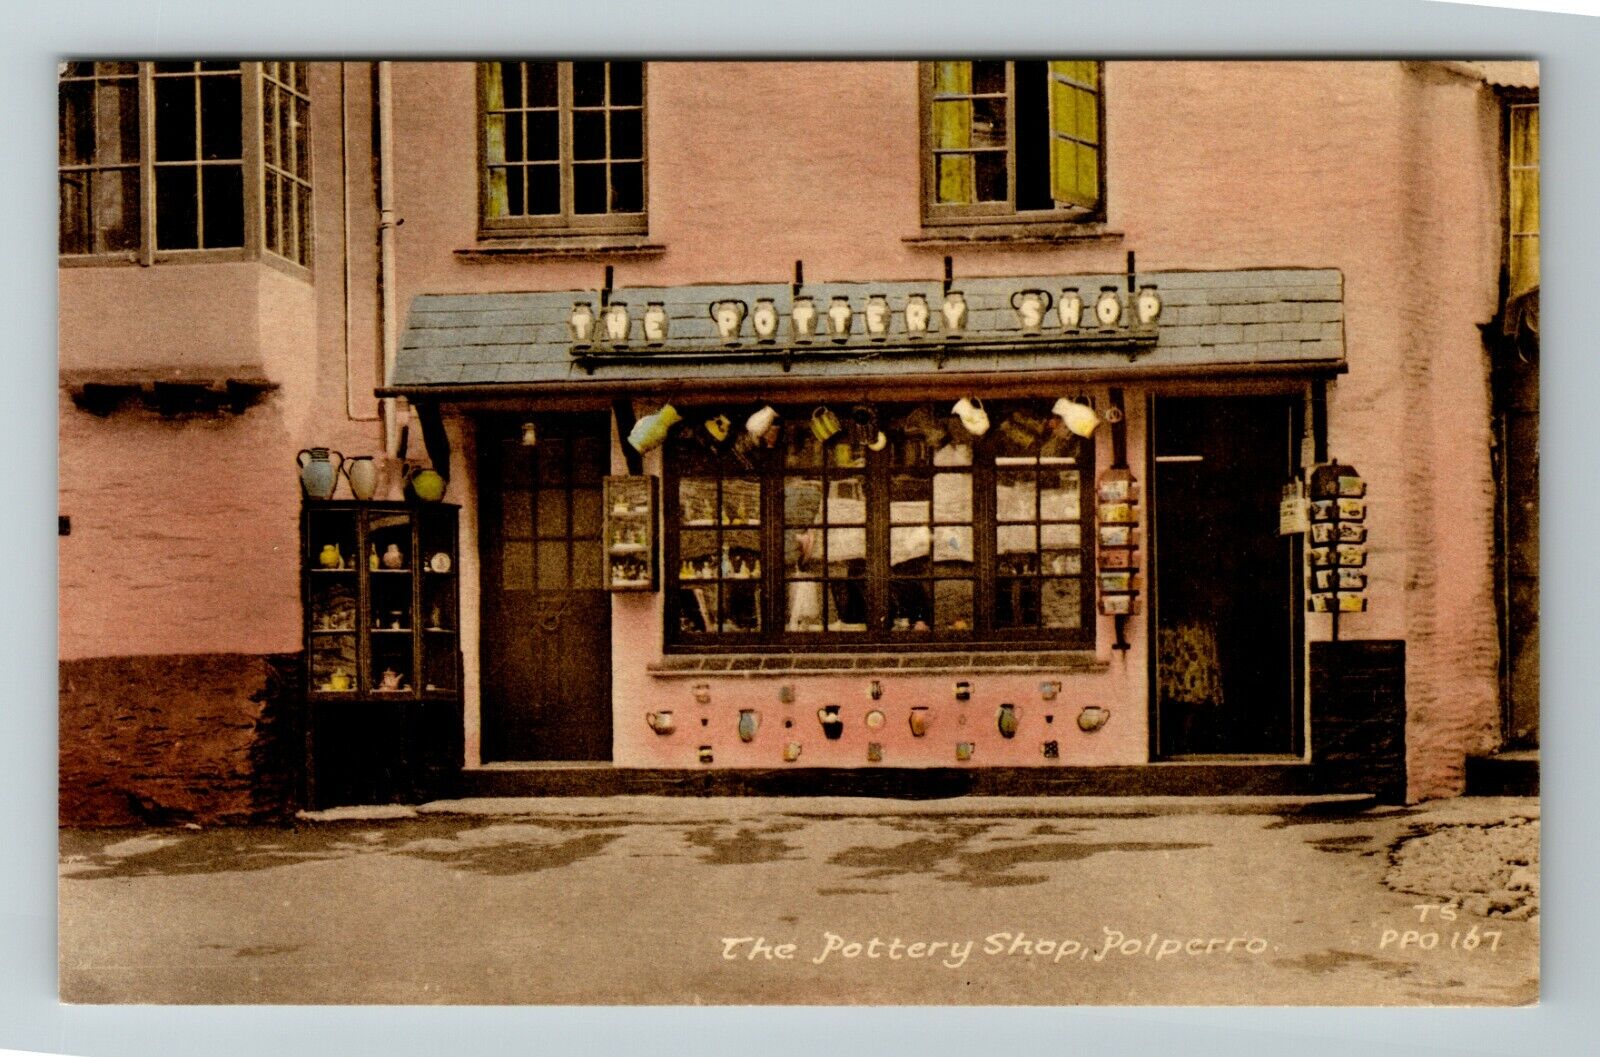 Polperro-United Kingdom, The Pottery Shop, Advertising, Vintage Postcard